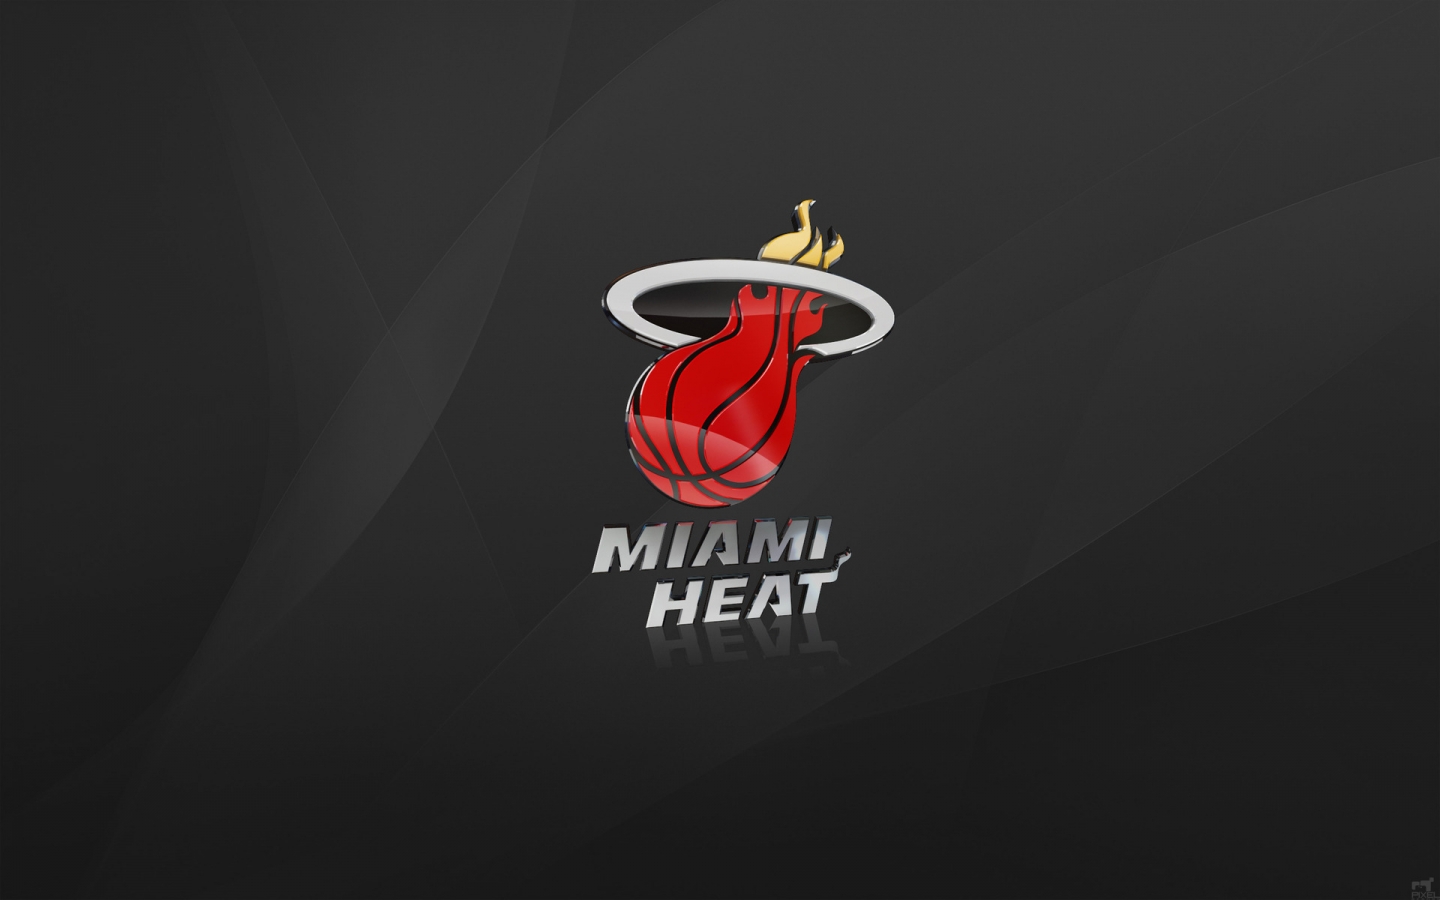 Miami Heat for 1440 x 900 widescreen resolution